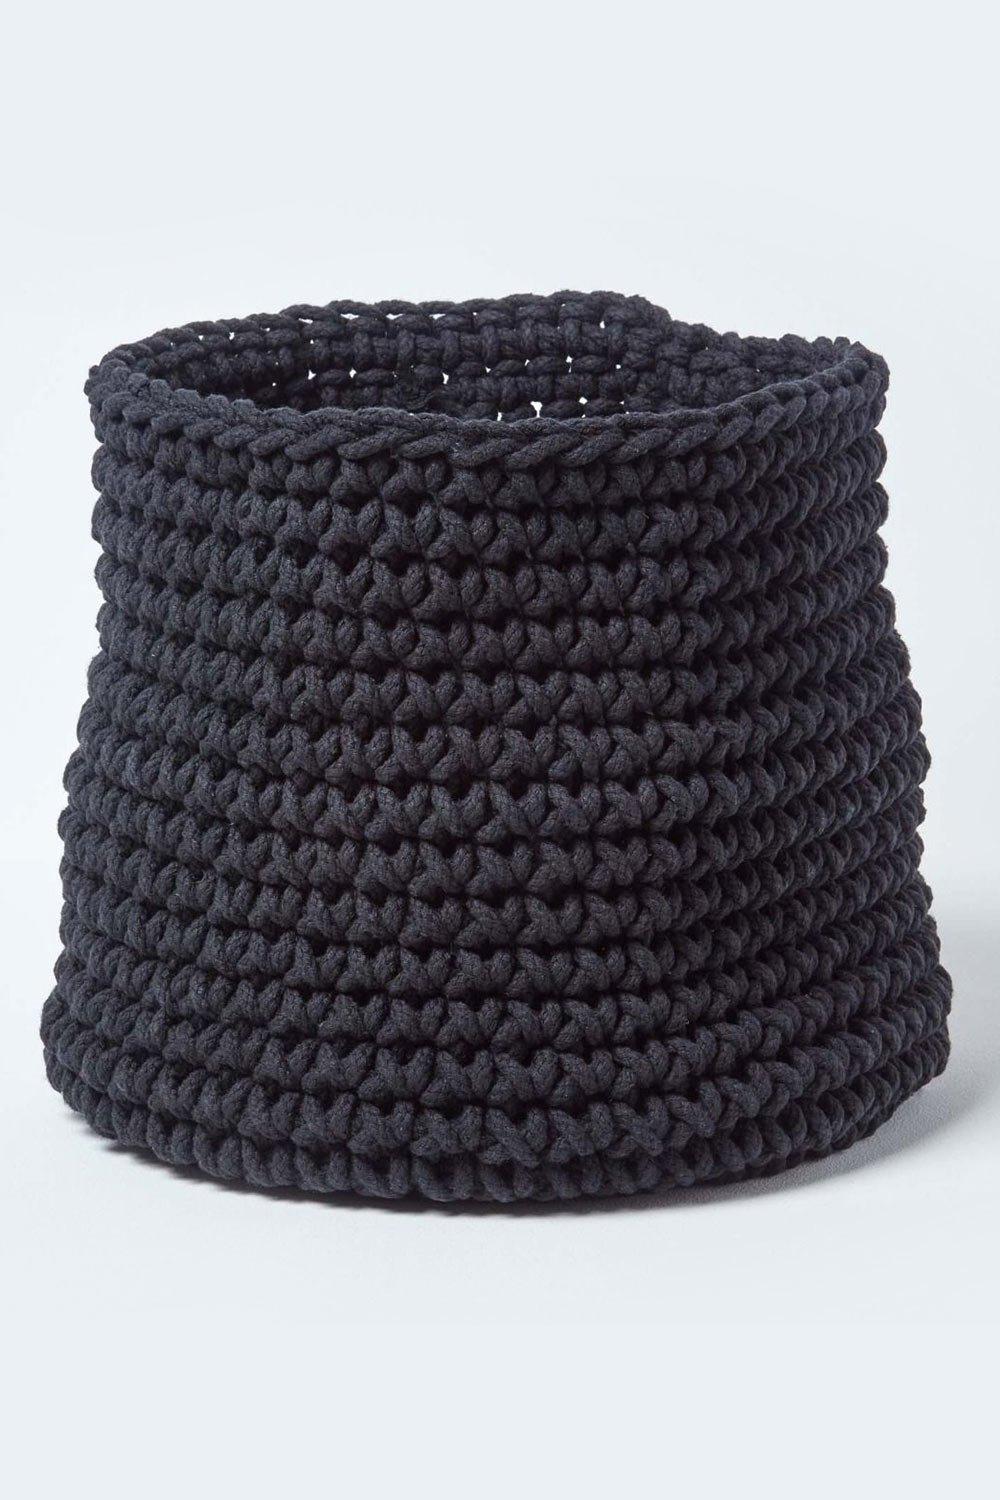 Homescapes Cotton Knitted Round Storage Basket, 42 x 37 cm|black